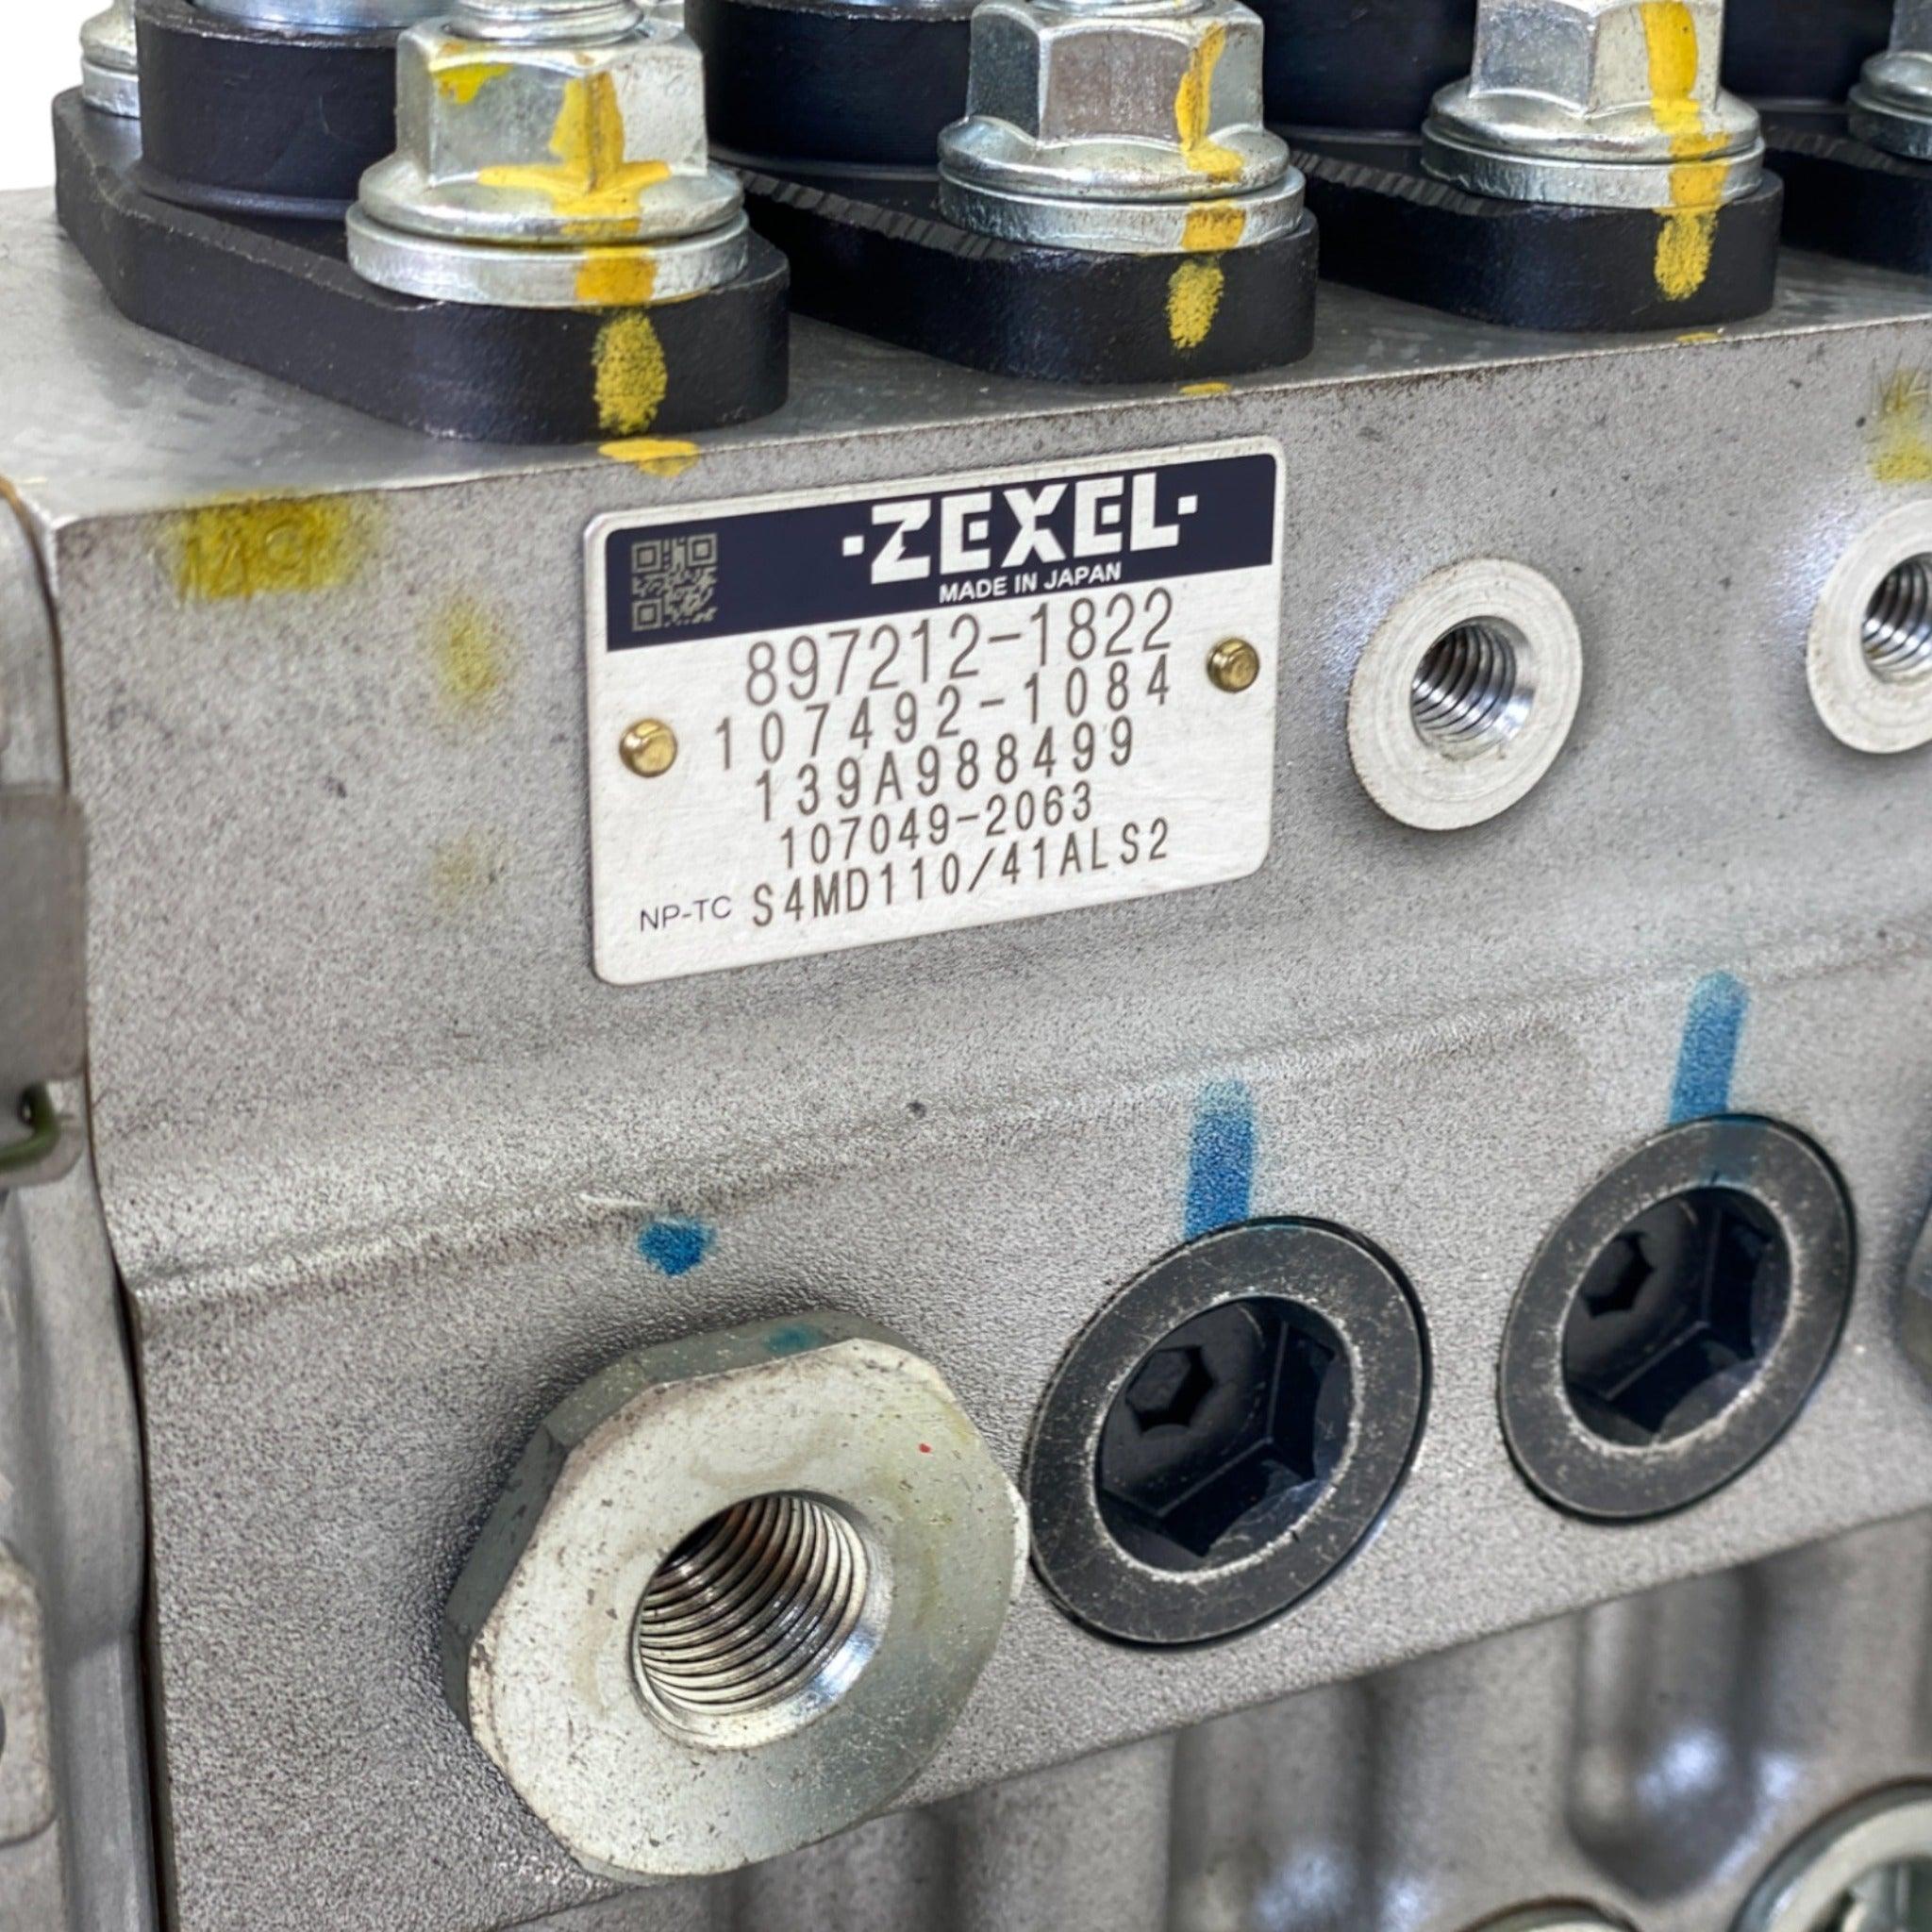 107492-1084 Genuine Zexel® Fuel Injection Pump - ADVANCED TRUCK PARTS